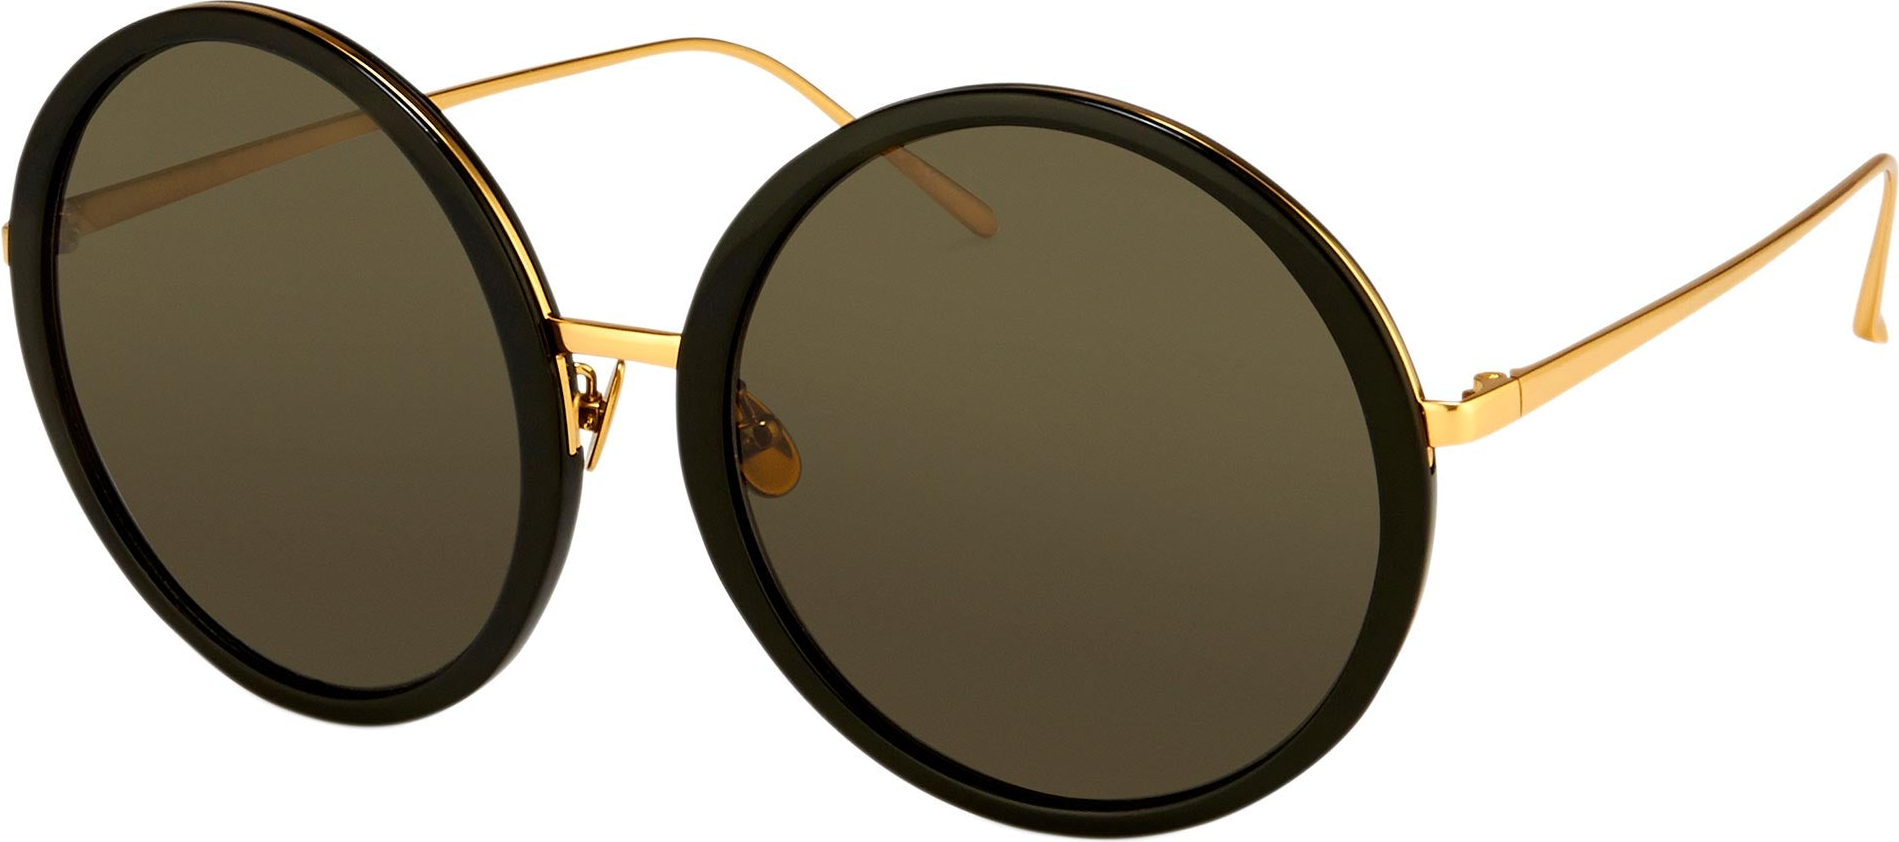 Kew Round Sunglasses in Black Frame (C1)